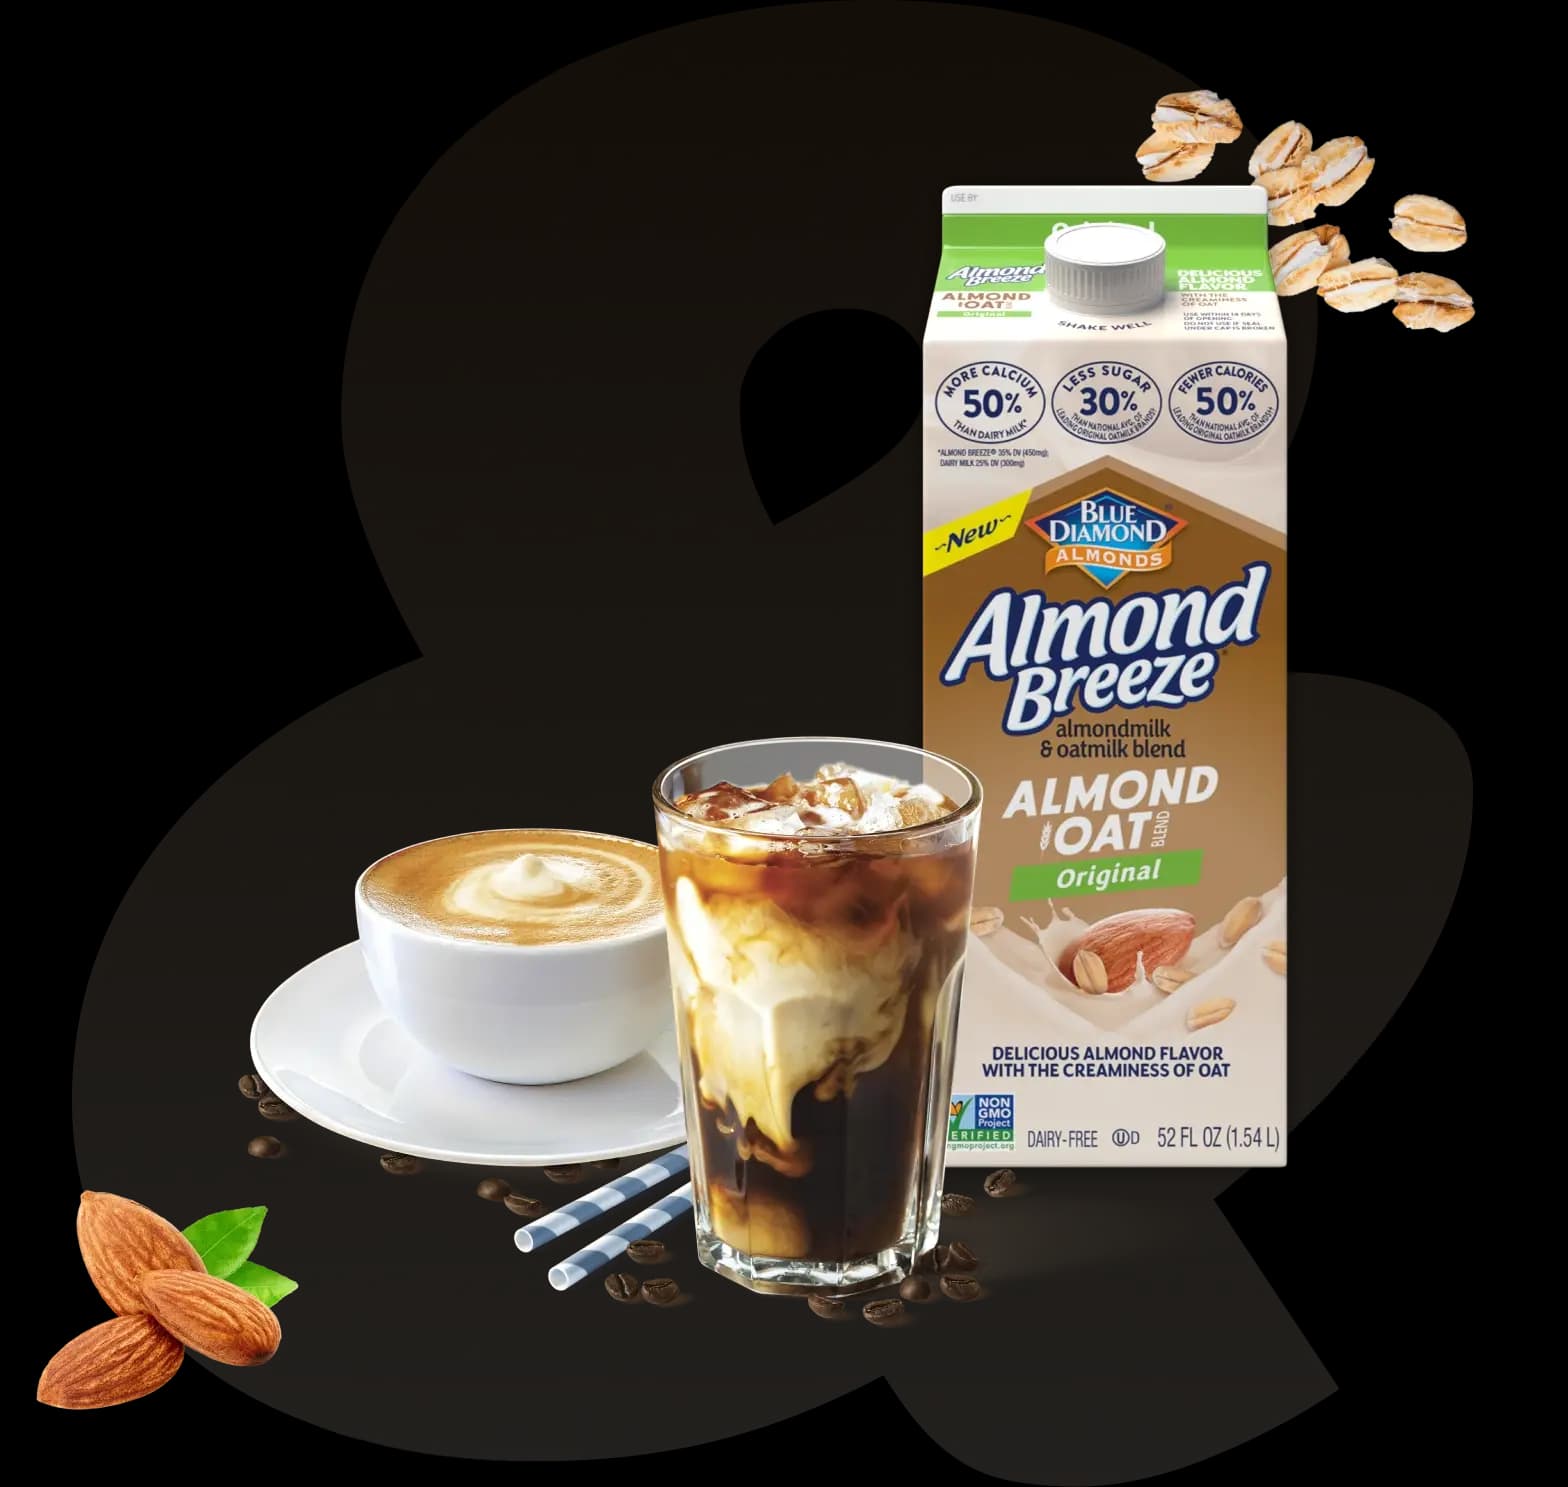 Almond Breeze almondmilk & oatmilk blend original